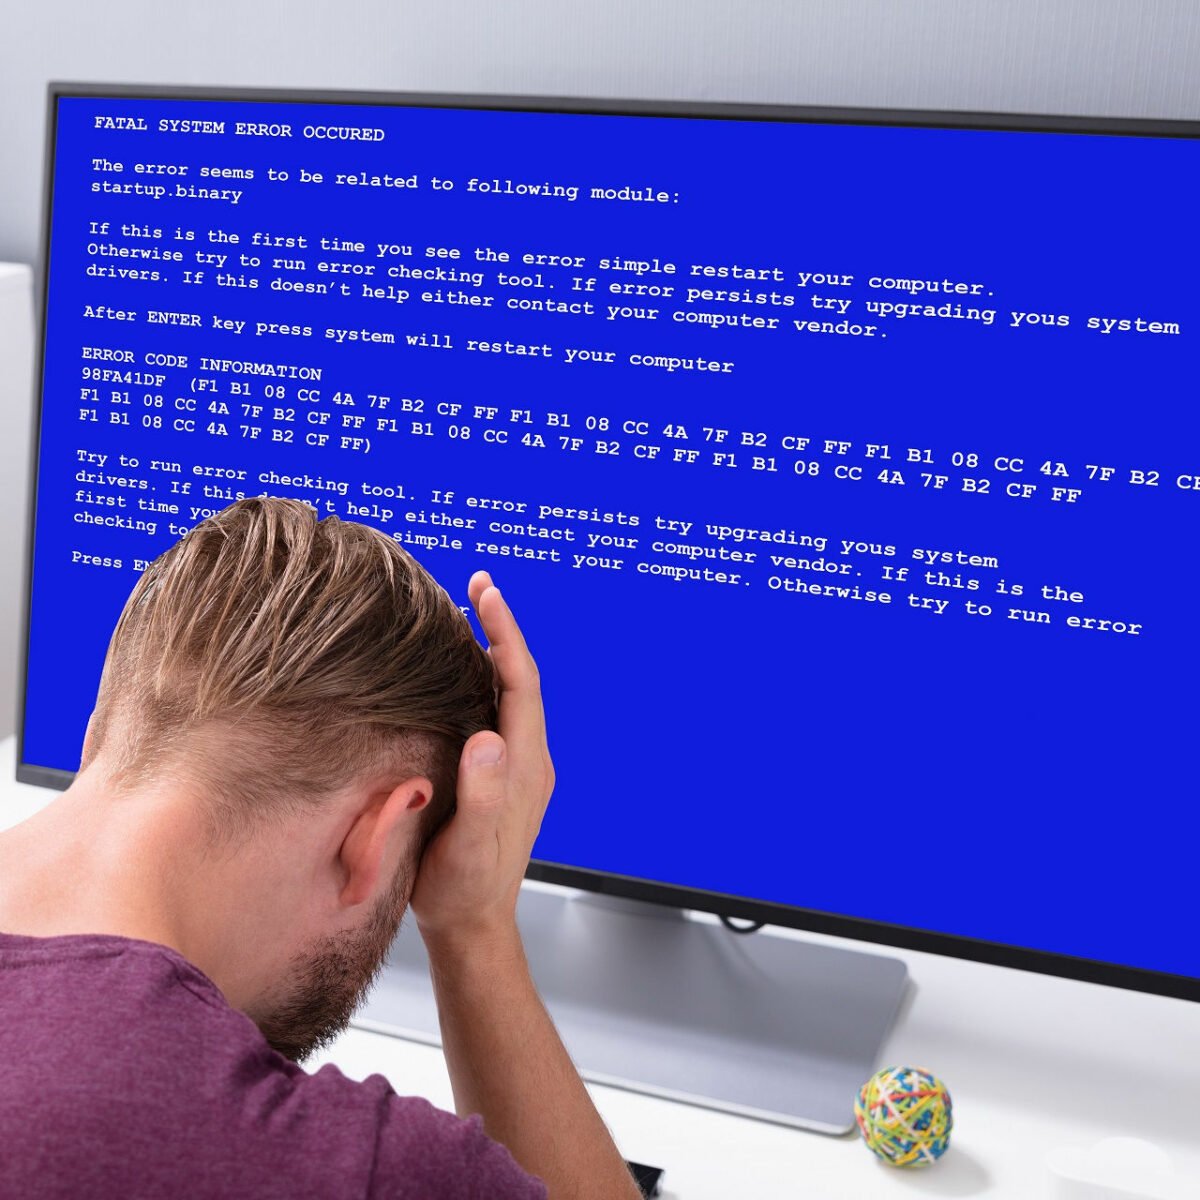 computer error microsoft windows license is invalid